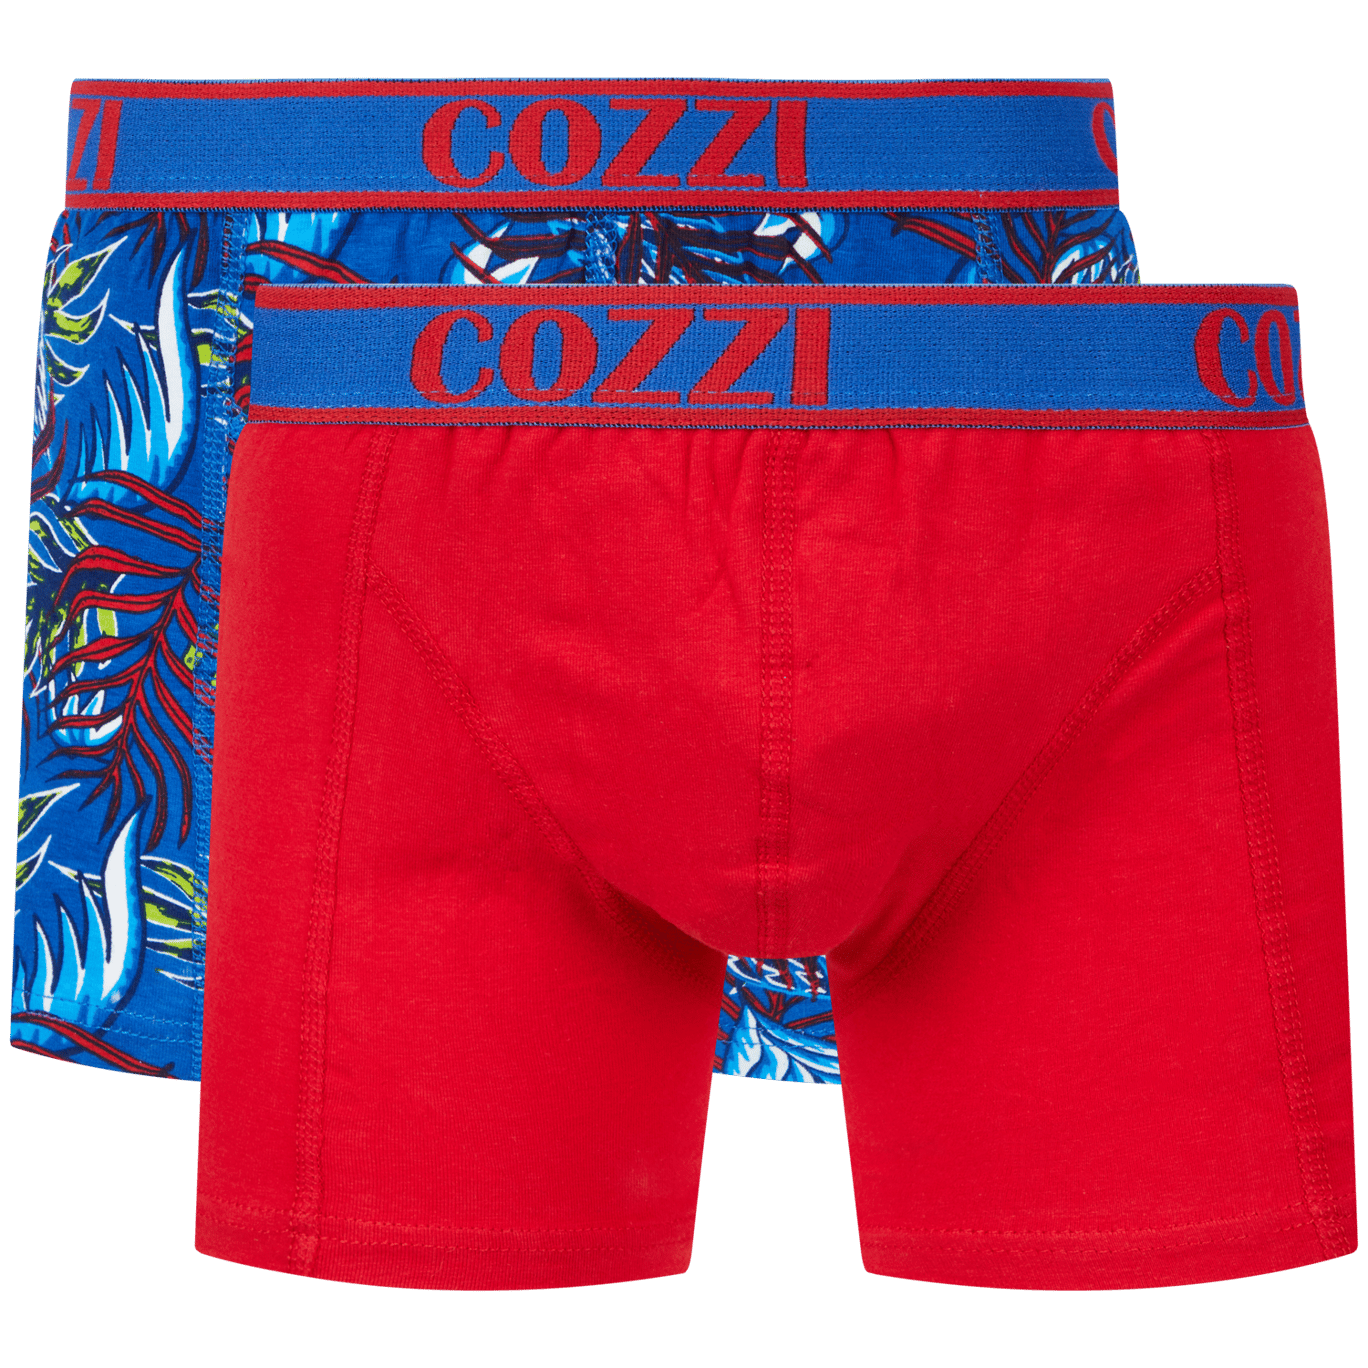 Cozzi boxershorts